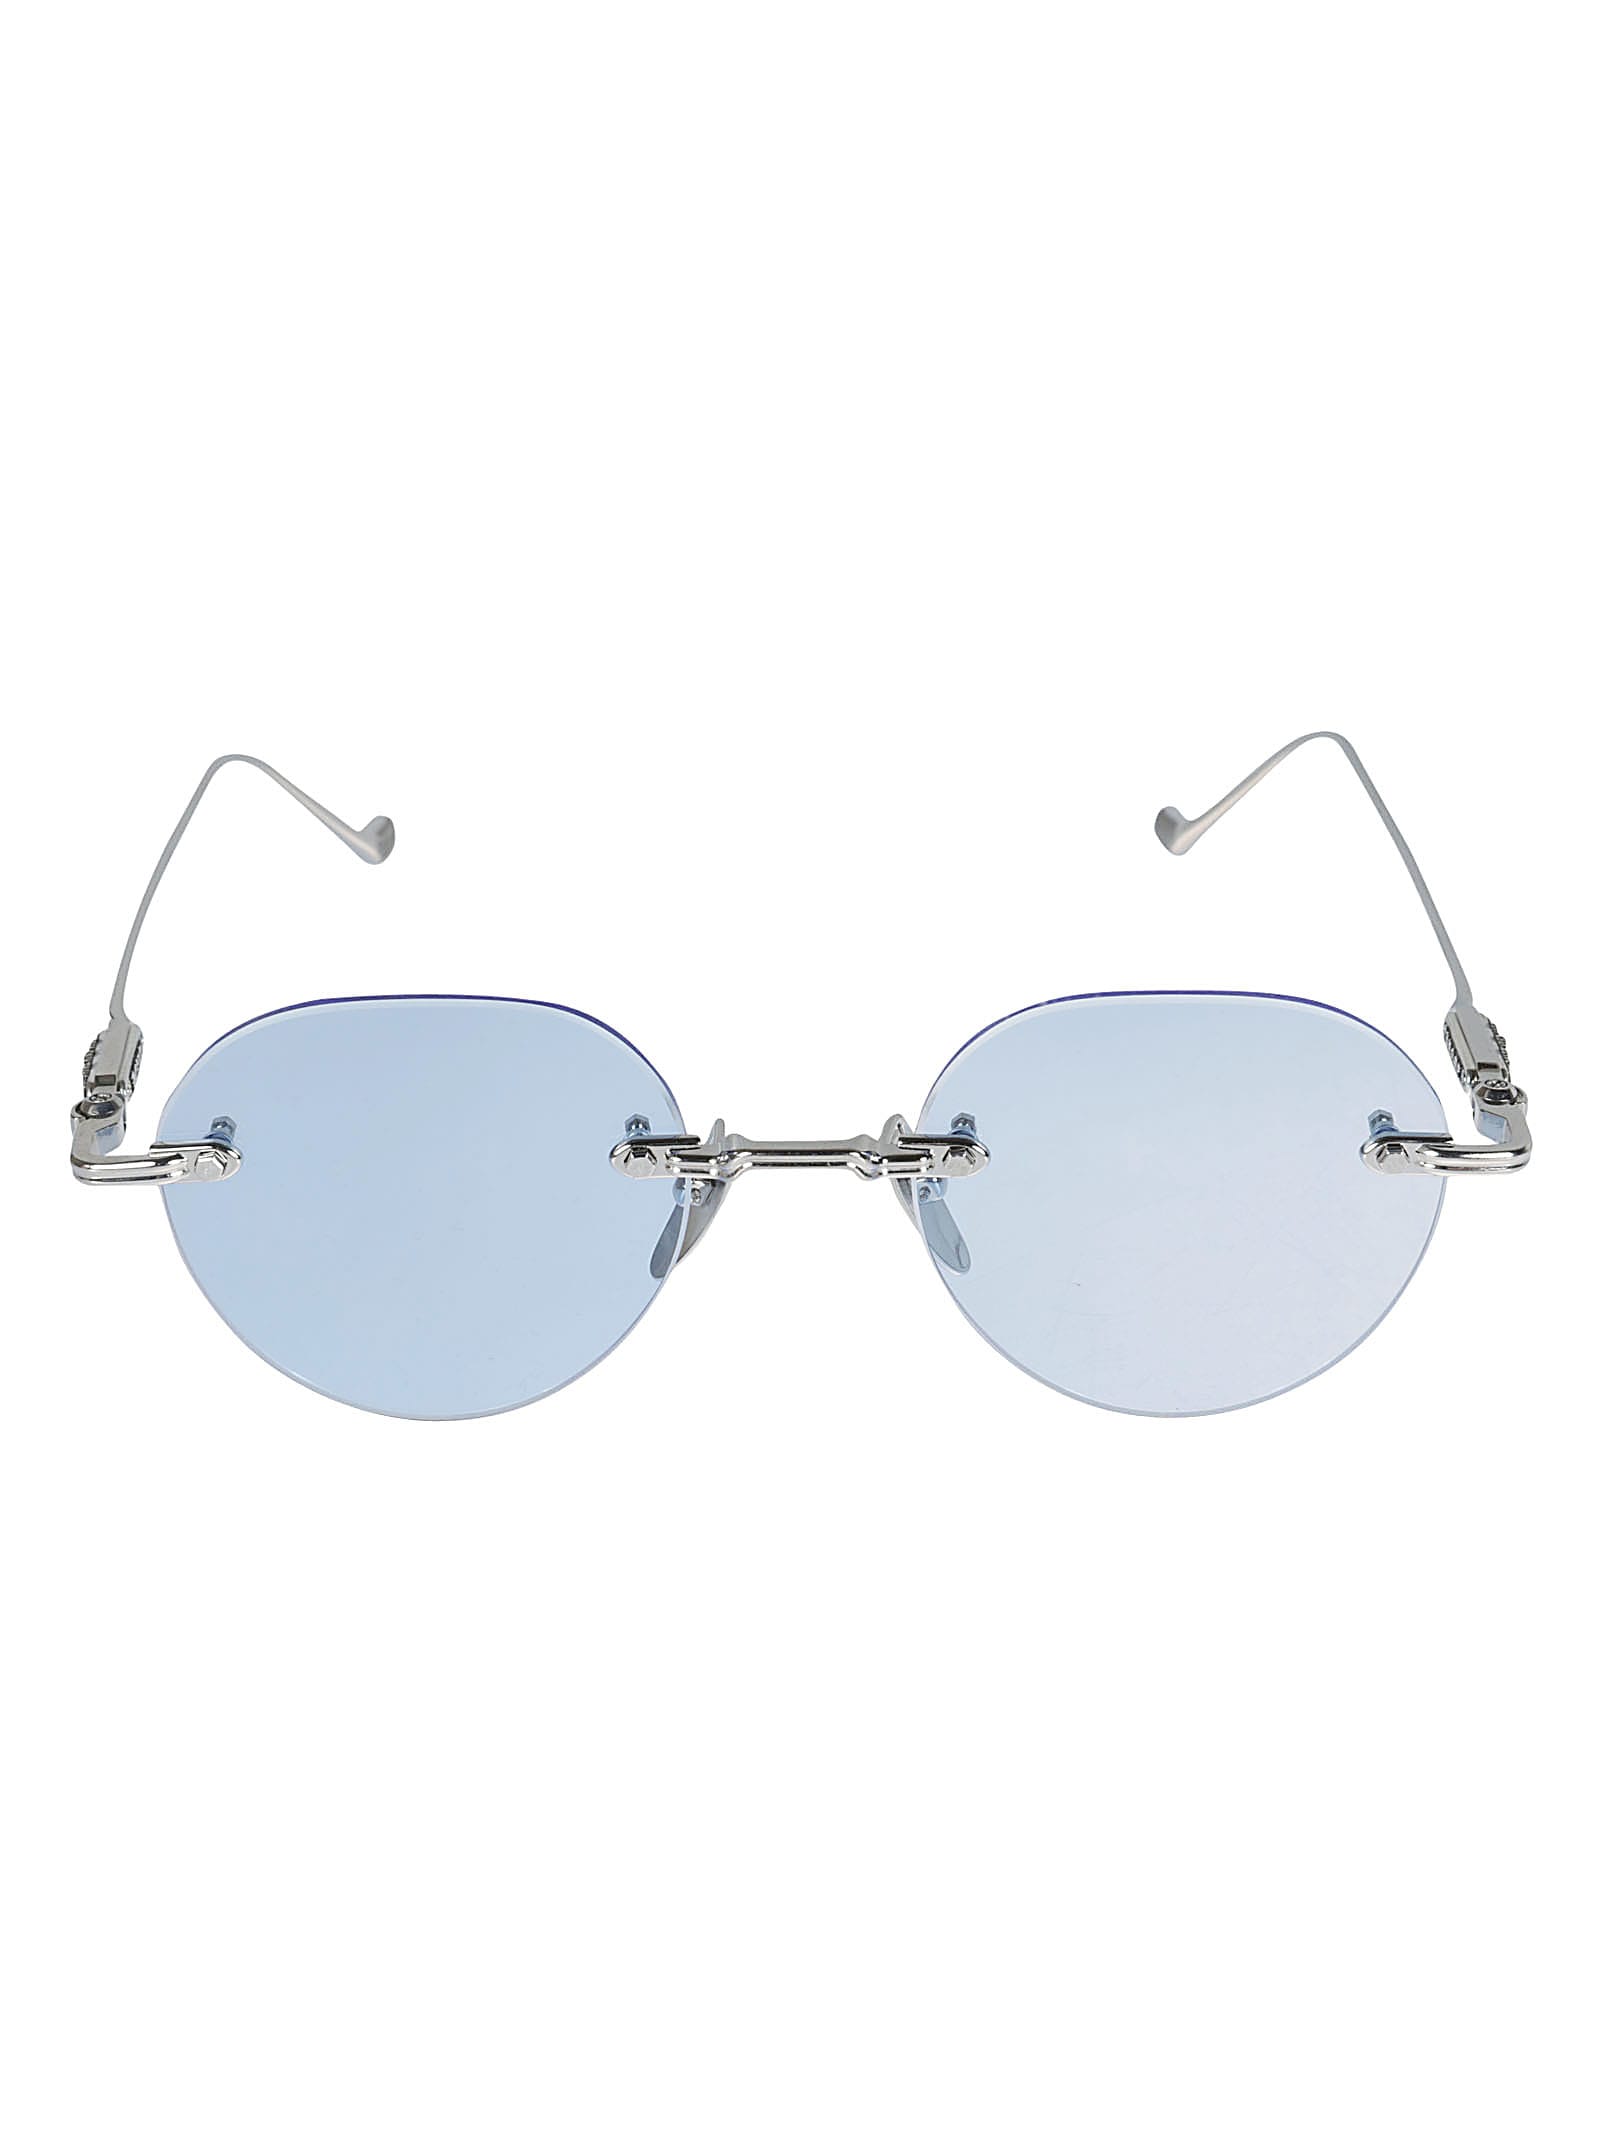 Chrome Hearts Classic Rimless Sunglasses